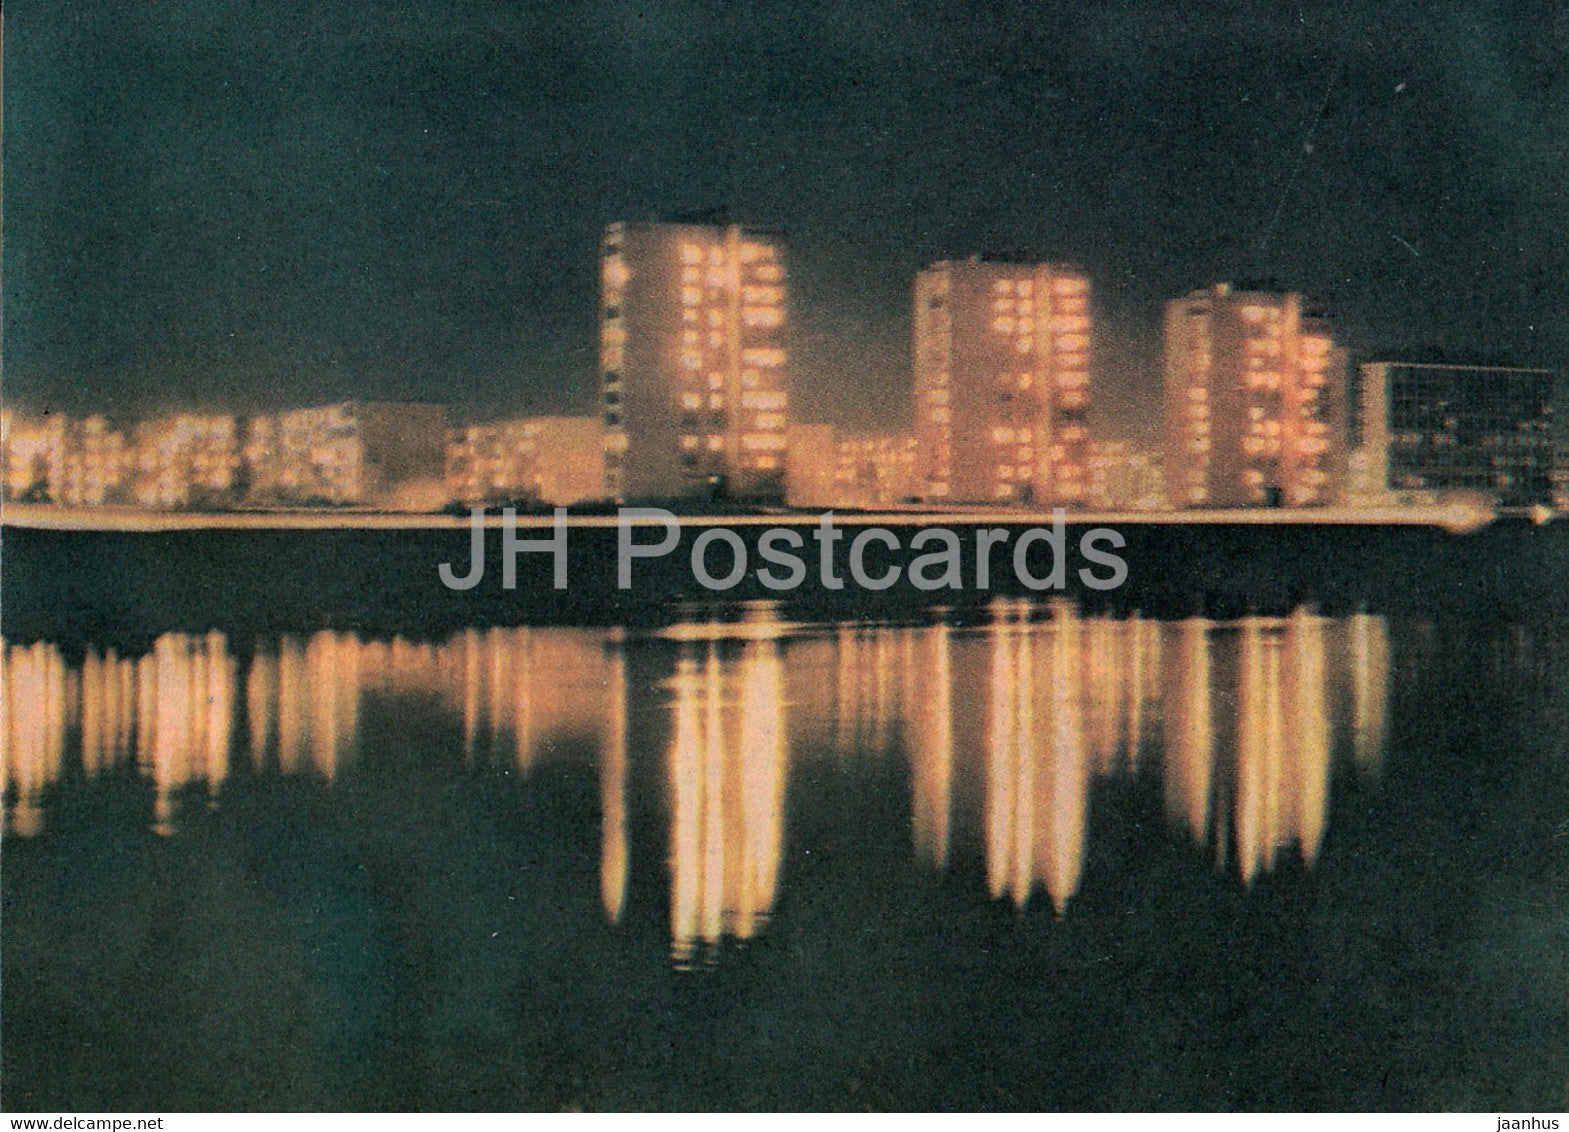 Kaunas - Kaunas at Night - 1982 - Lithuania USSR - unused - JH Postcards